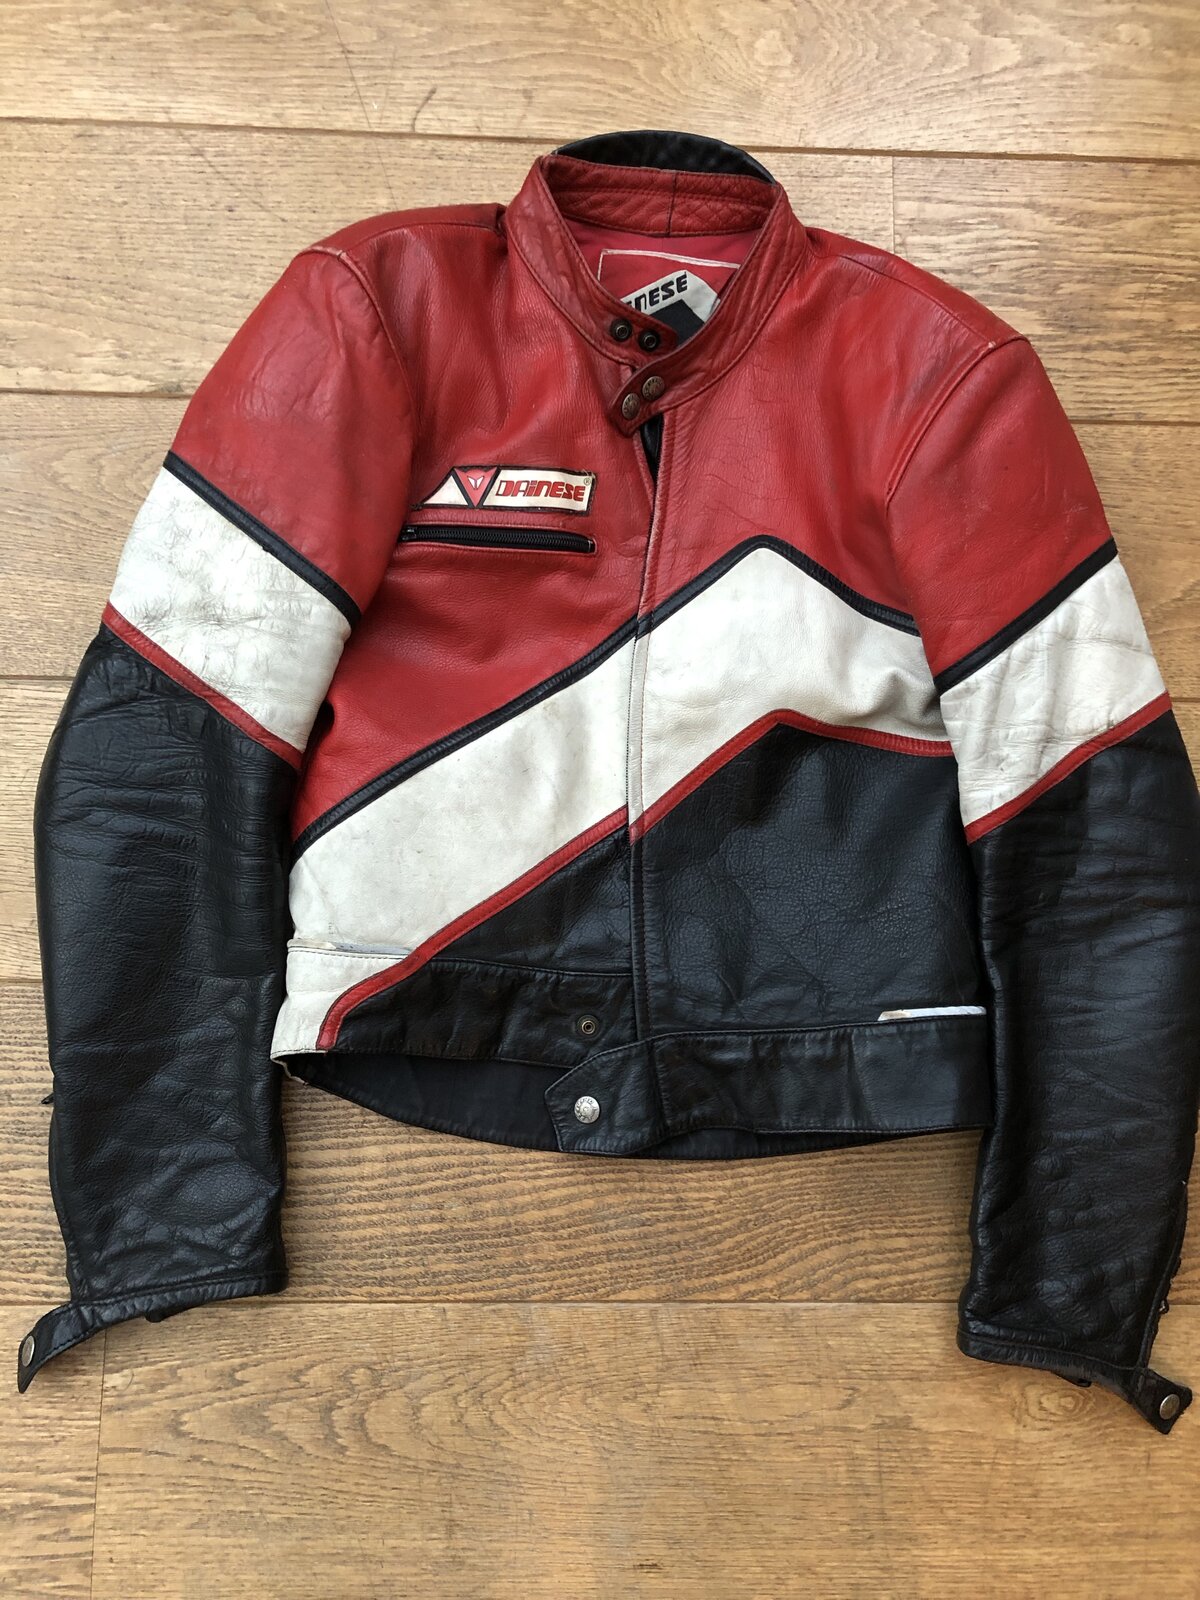 Size 50 Vintage Dainese Jacket. | Ducati Forum